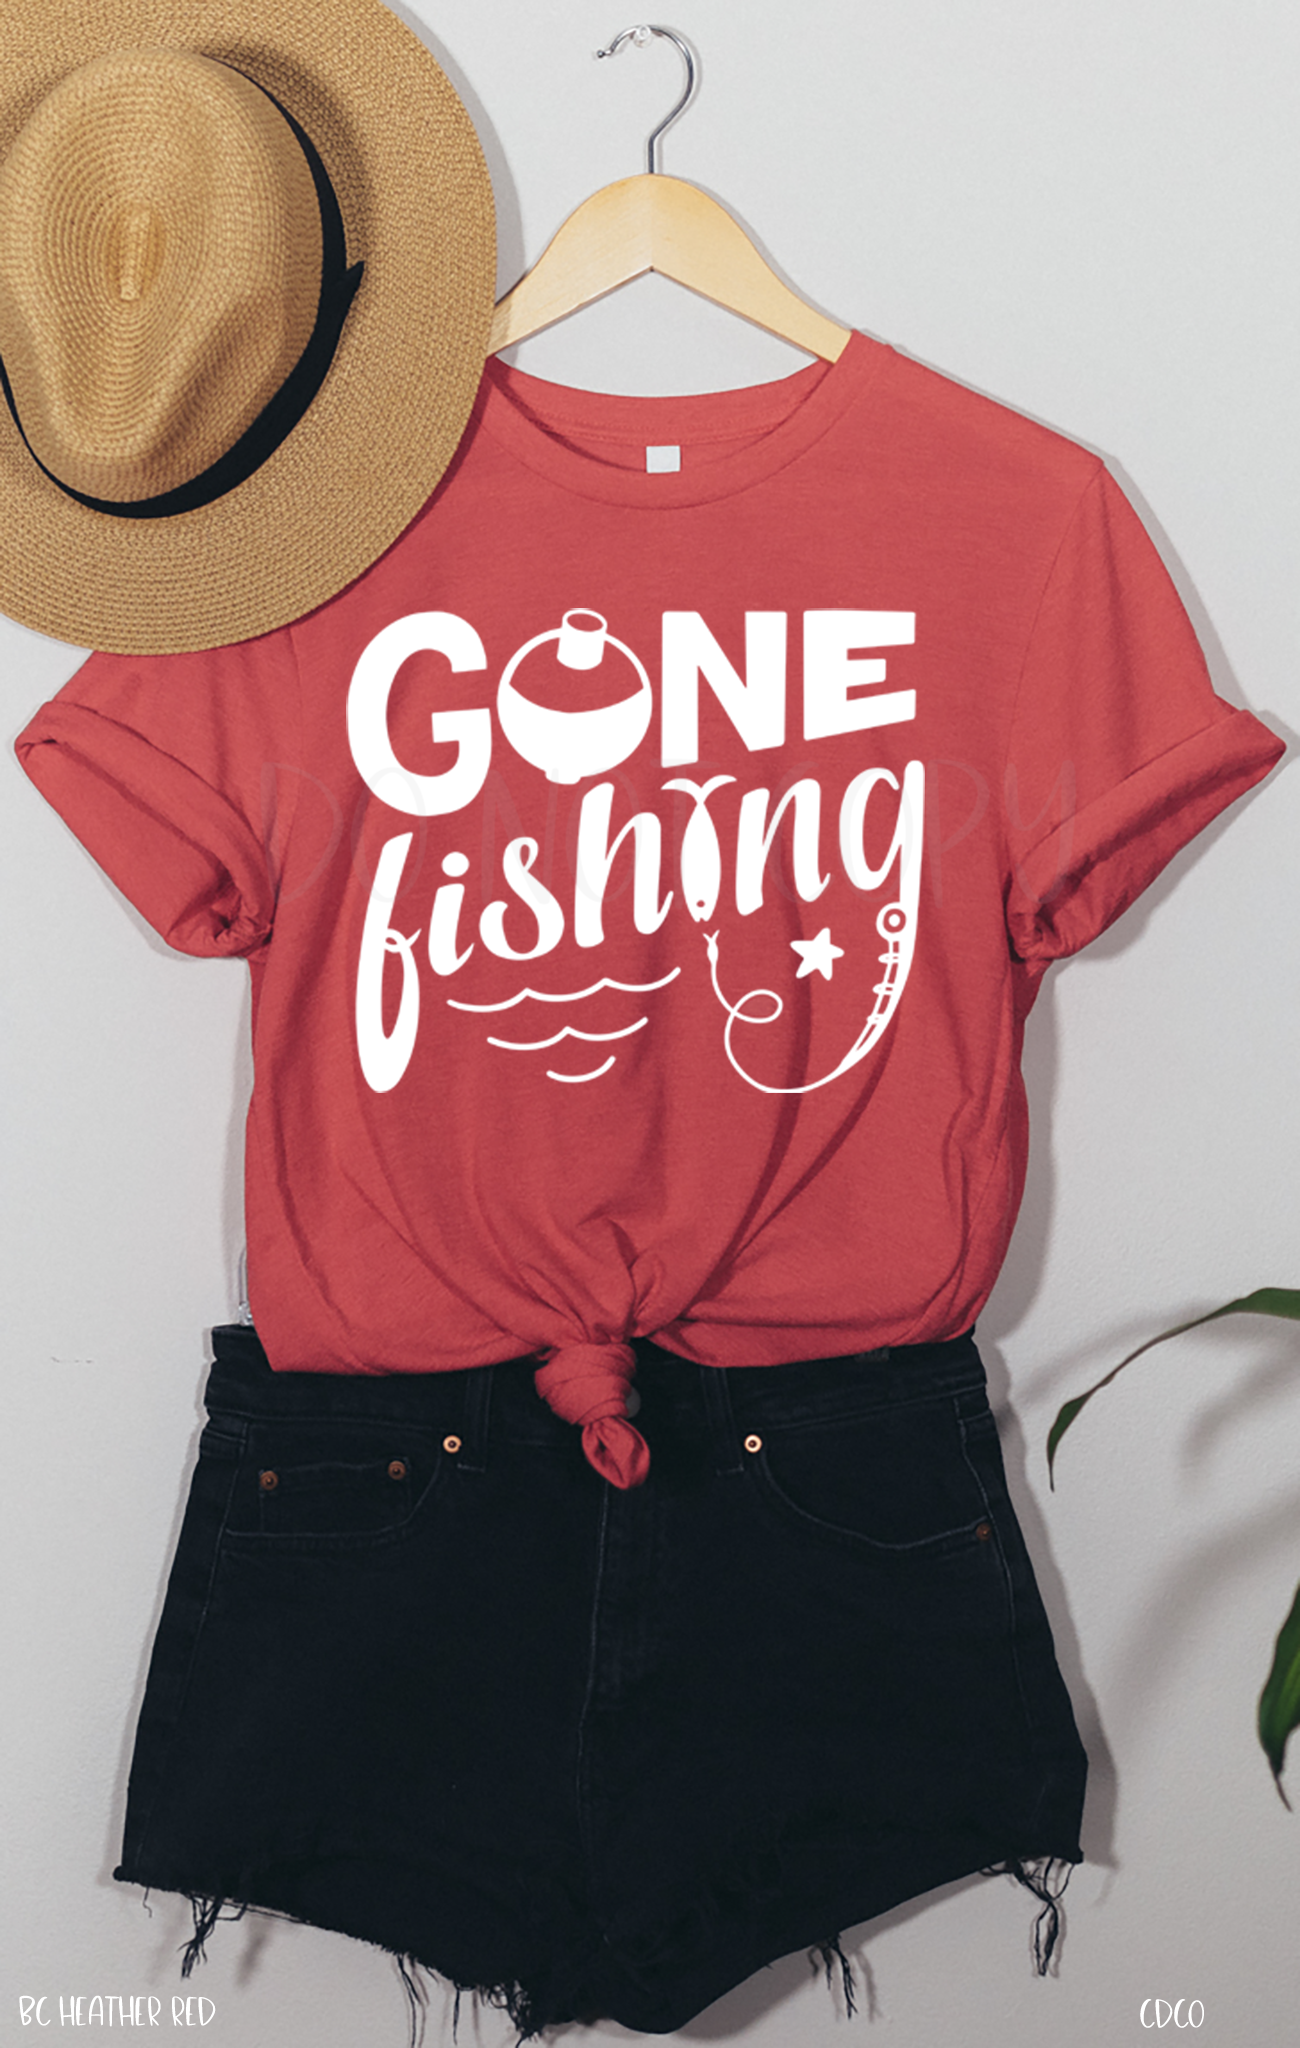 Gone Fishing (325°)